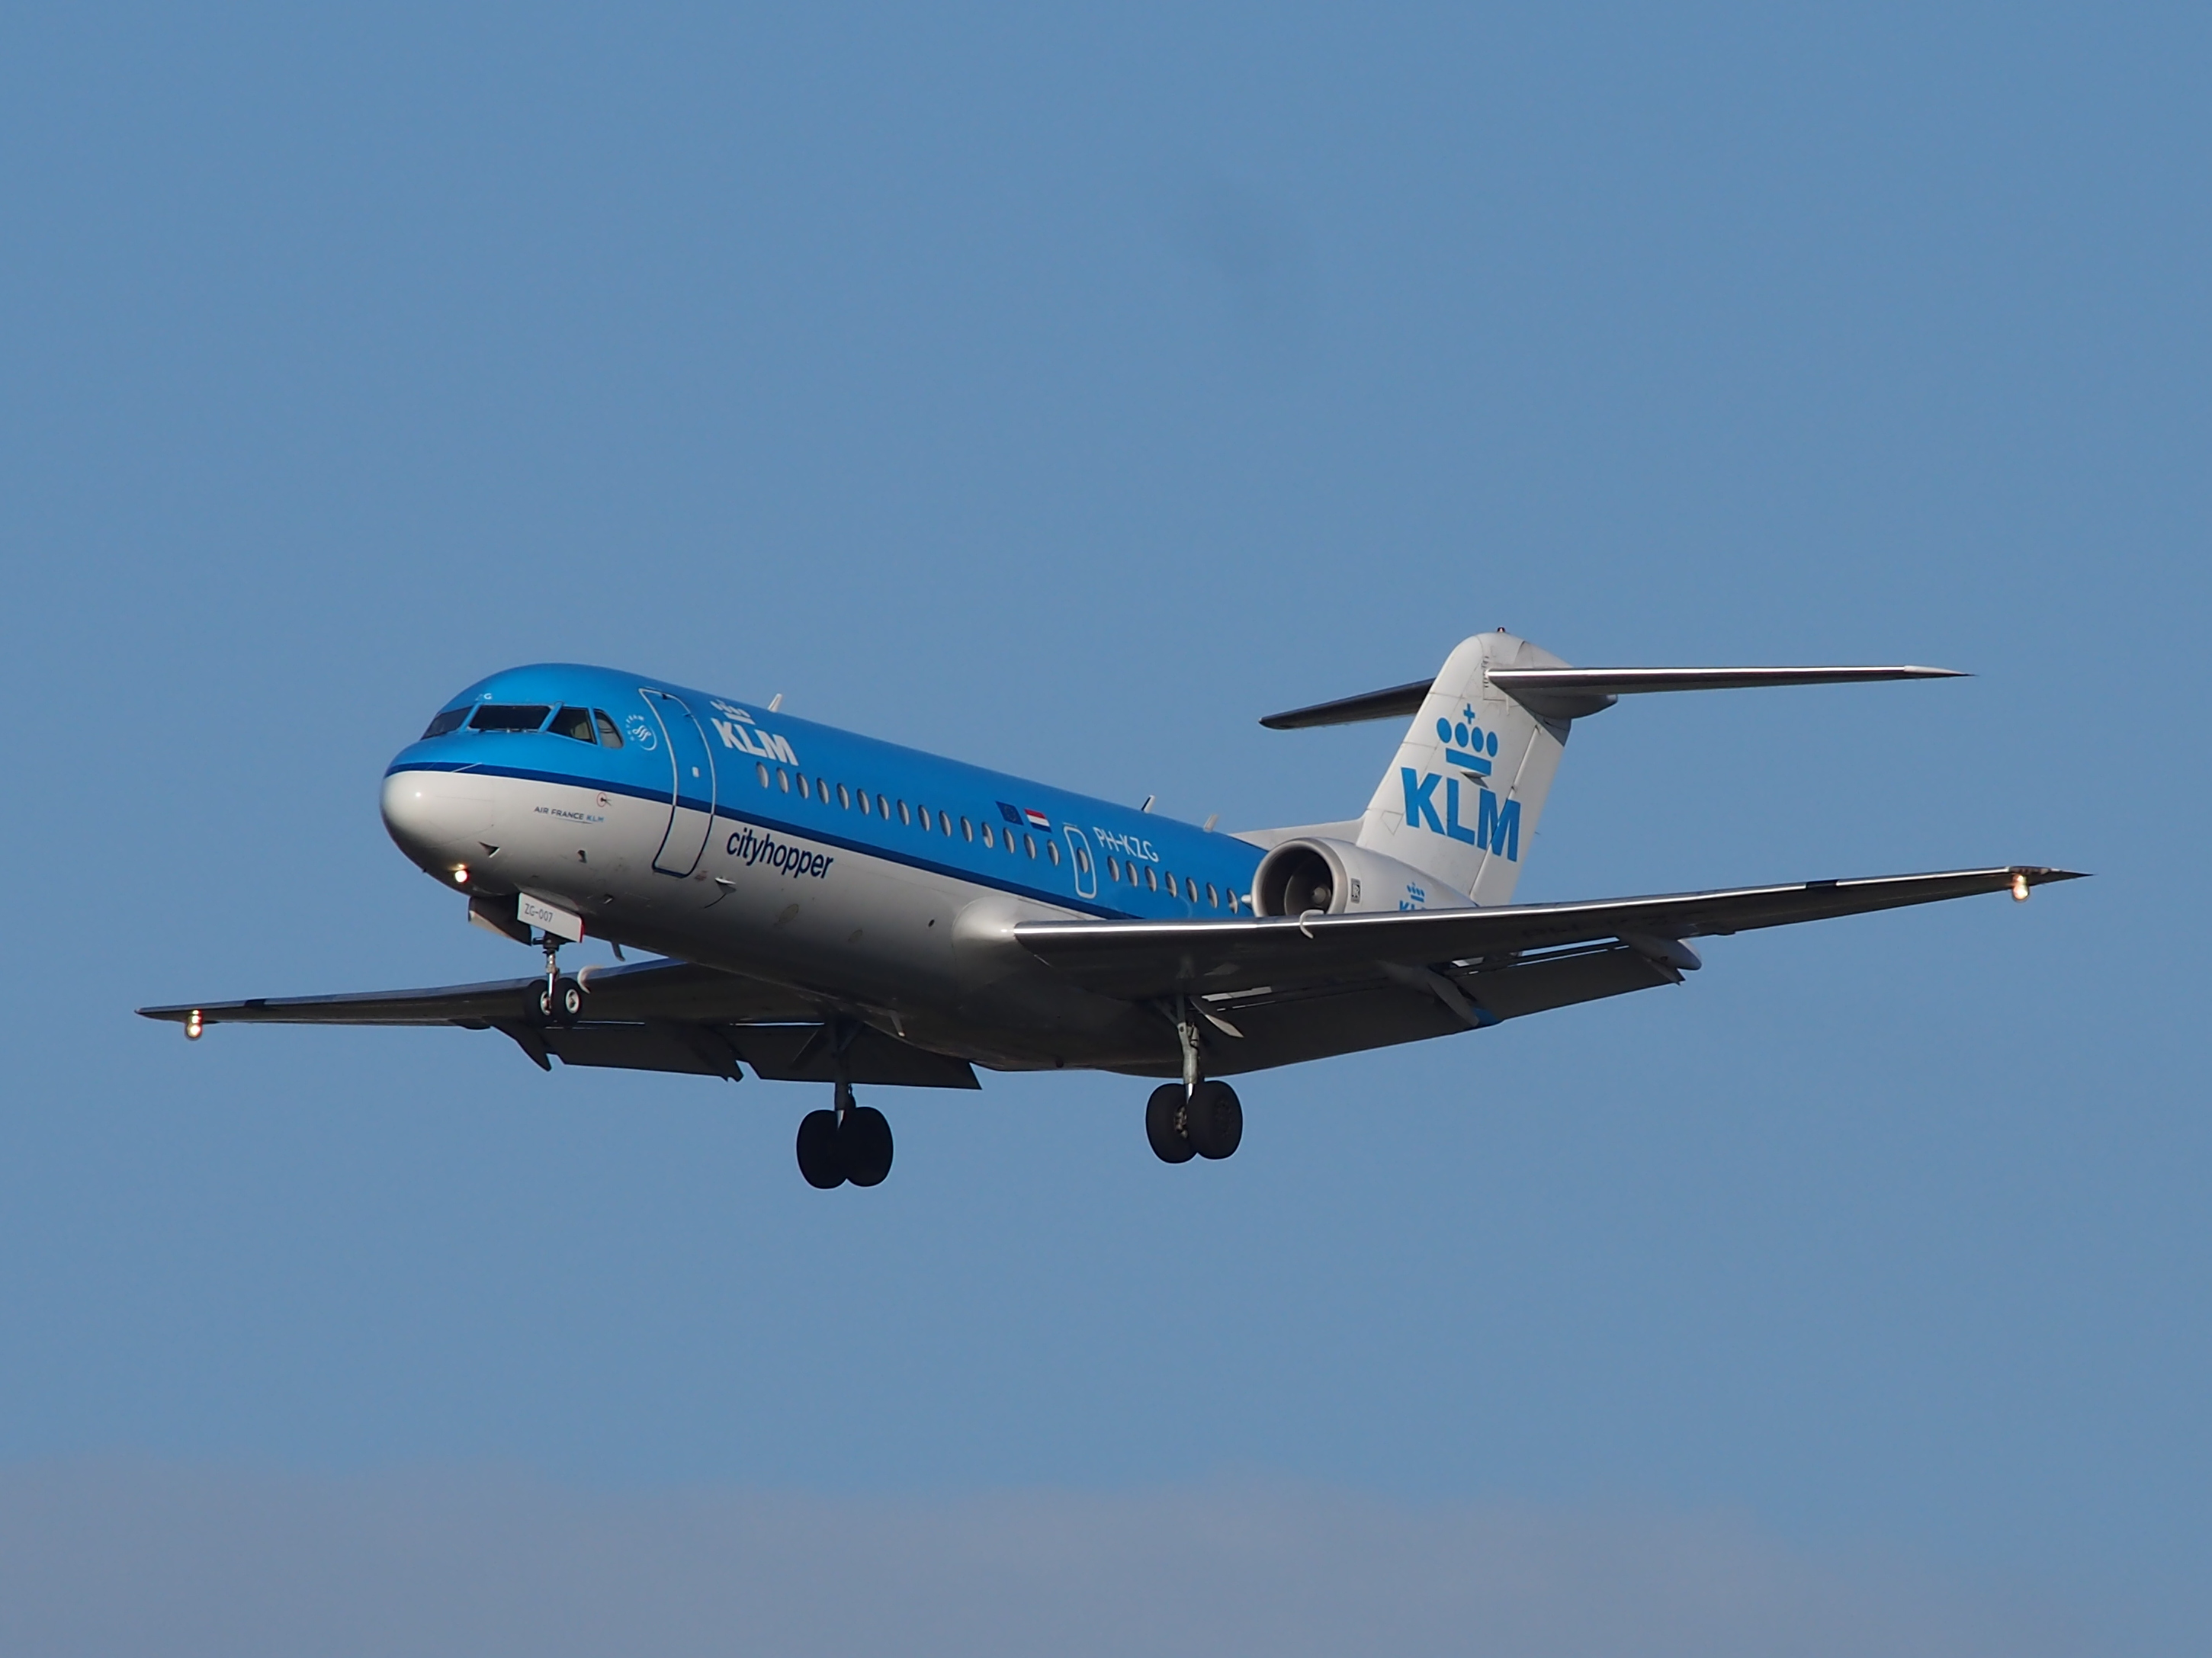 PH-KZG, landing at Schiphol on 2Feb2014 pic15